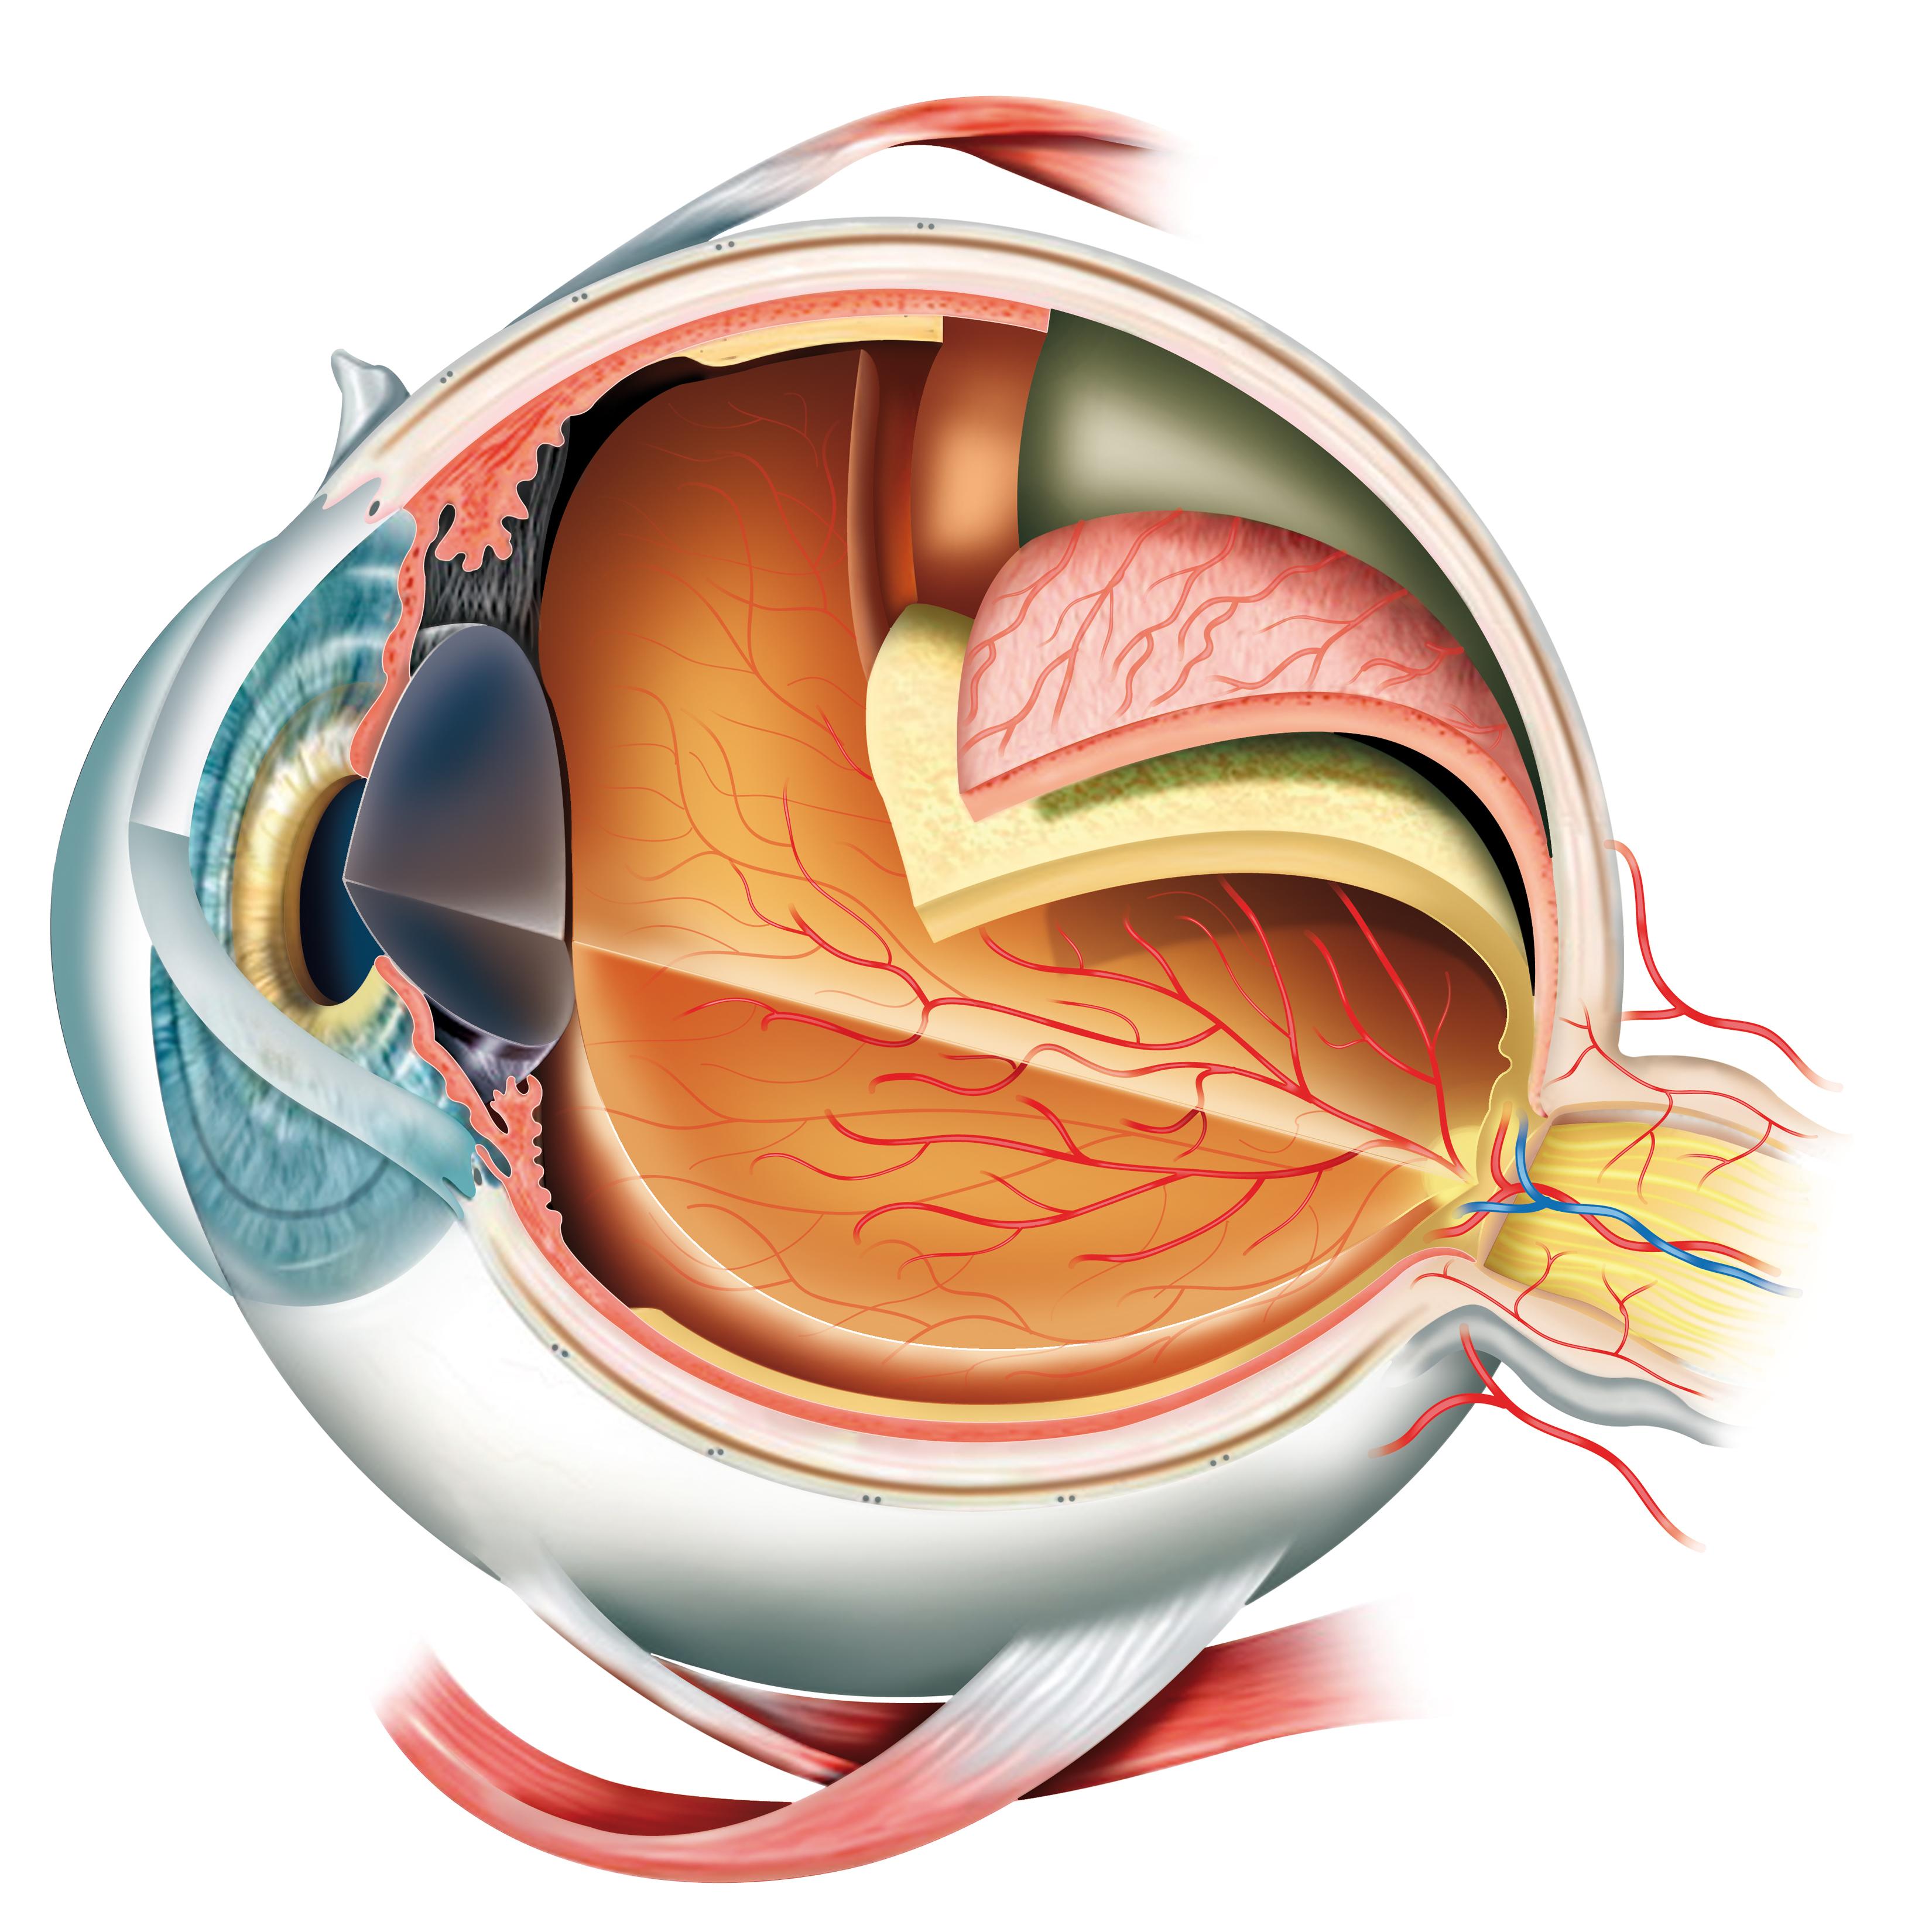 How the Eyes Work  National Eye Institute